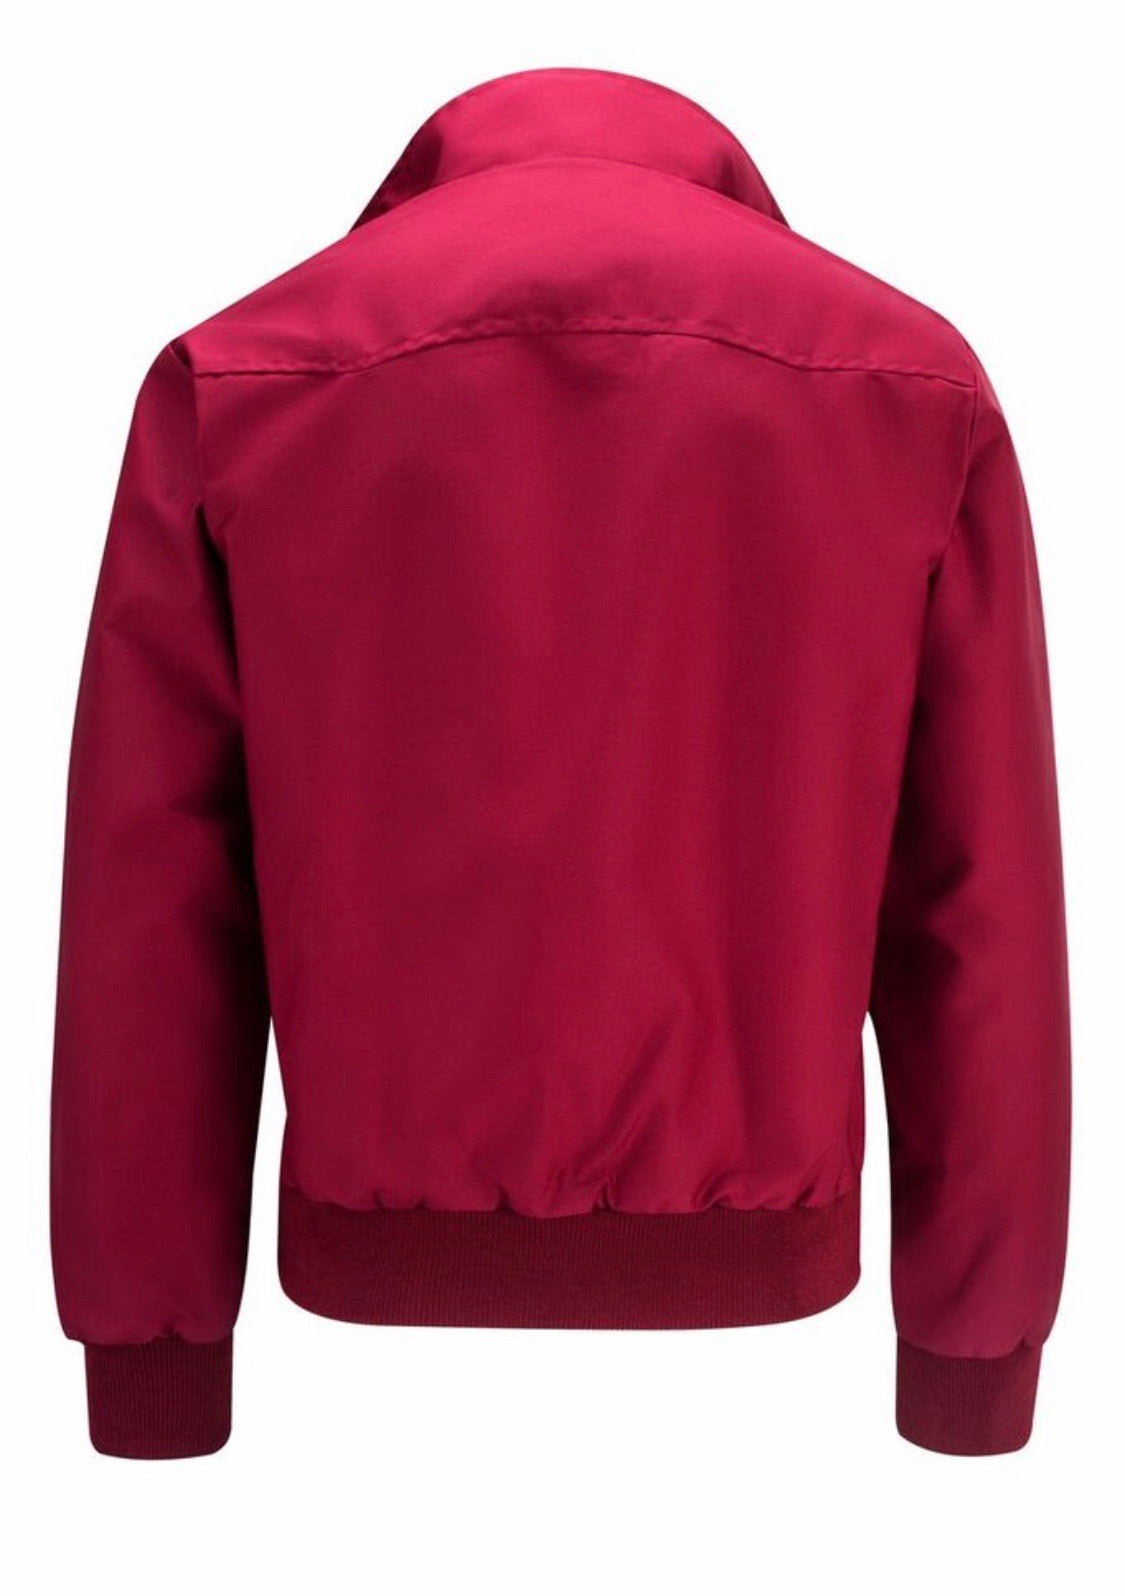 Classic Red Harrington Jacket